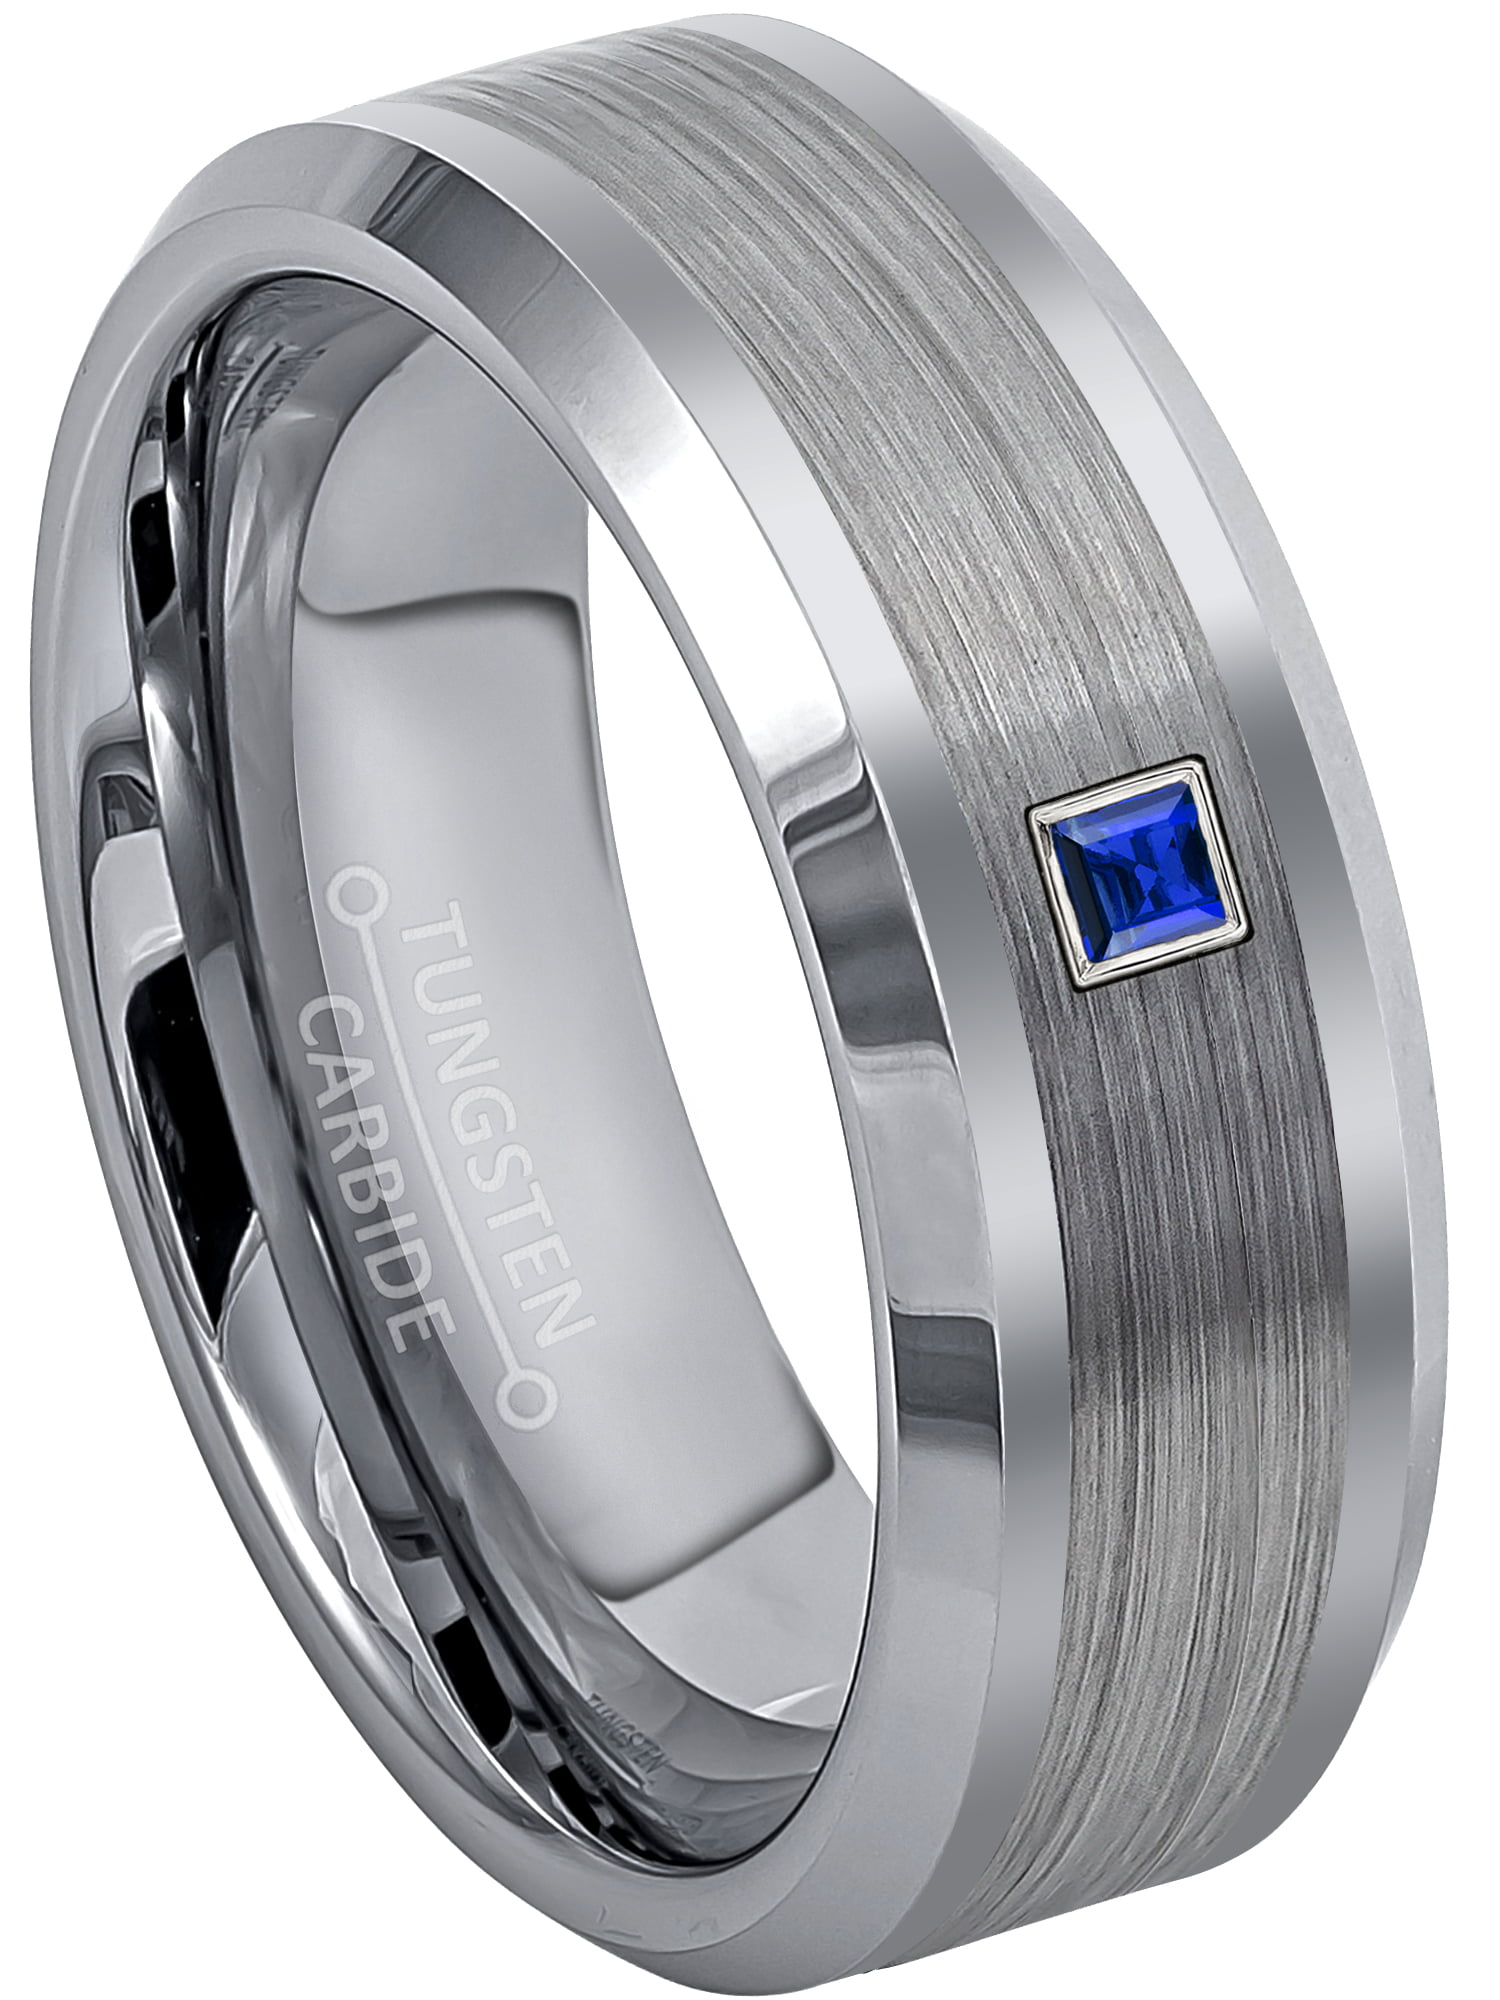 0.07ct Black Diamond Cobalt Ring Jewelry Avalanche 8MM Comfort Fit Brushed Finish Beveled Edge Cobalt Chrome Wedding Band